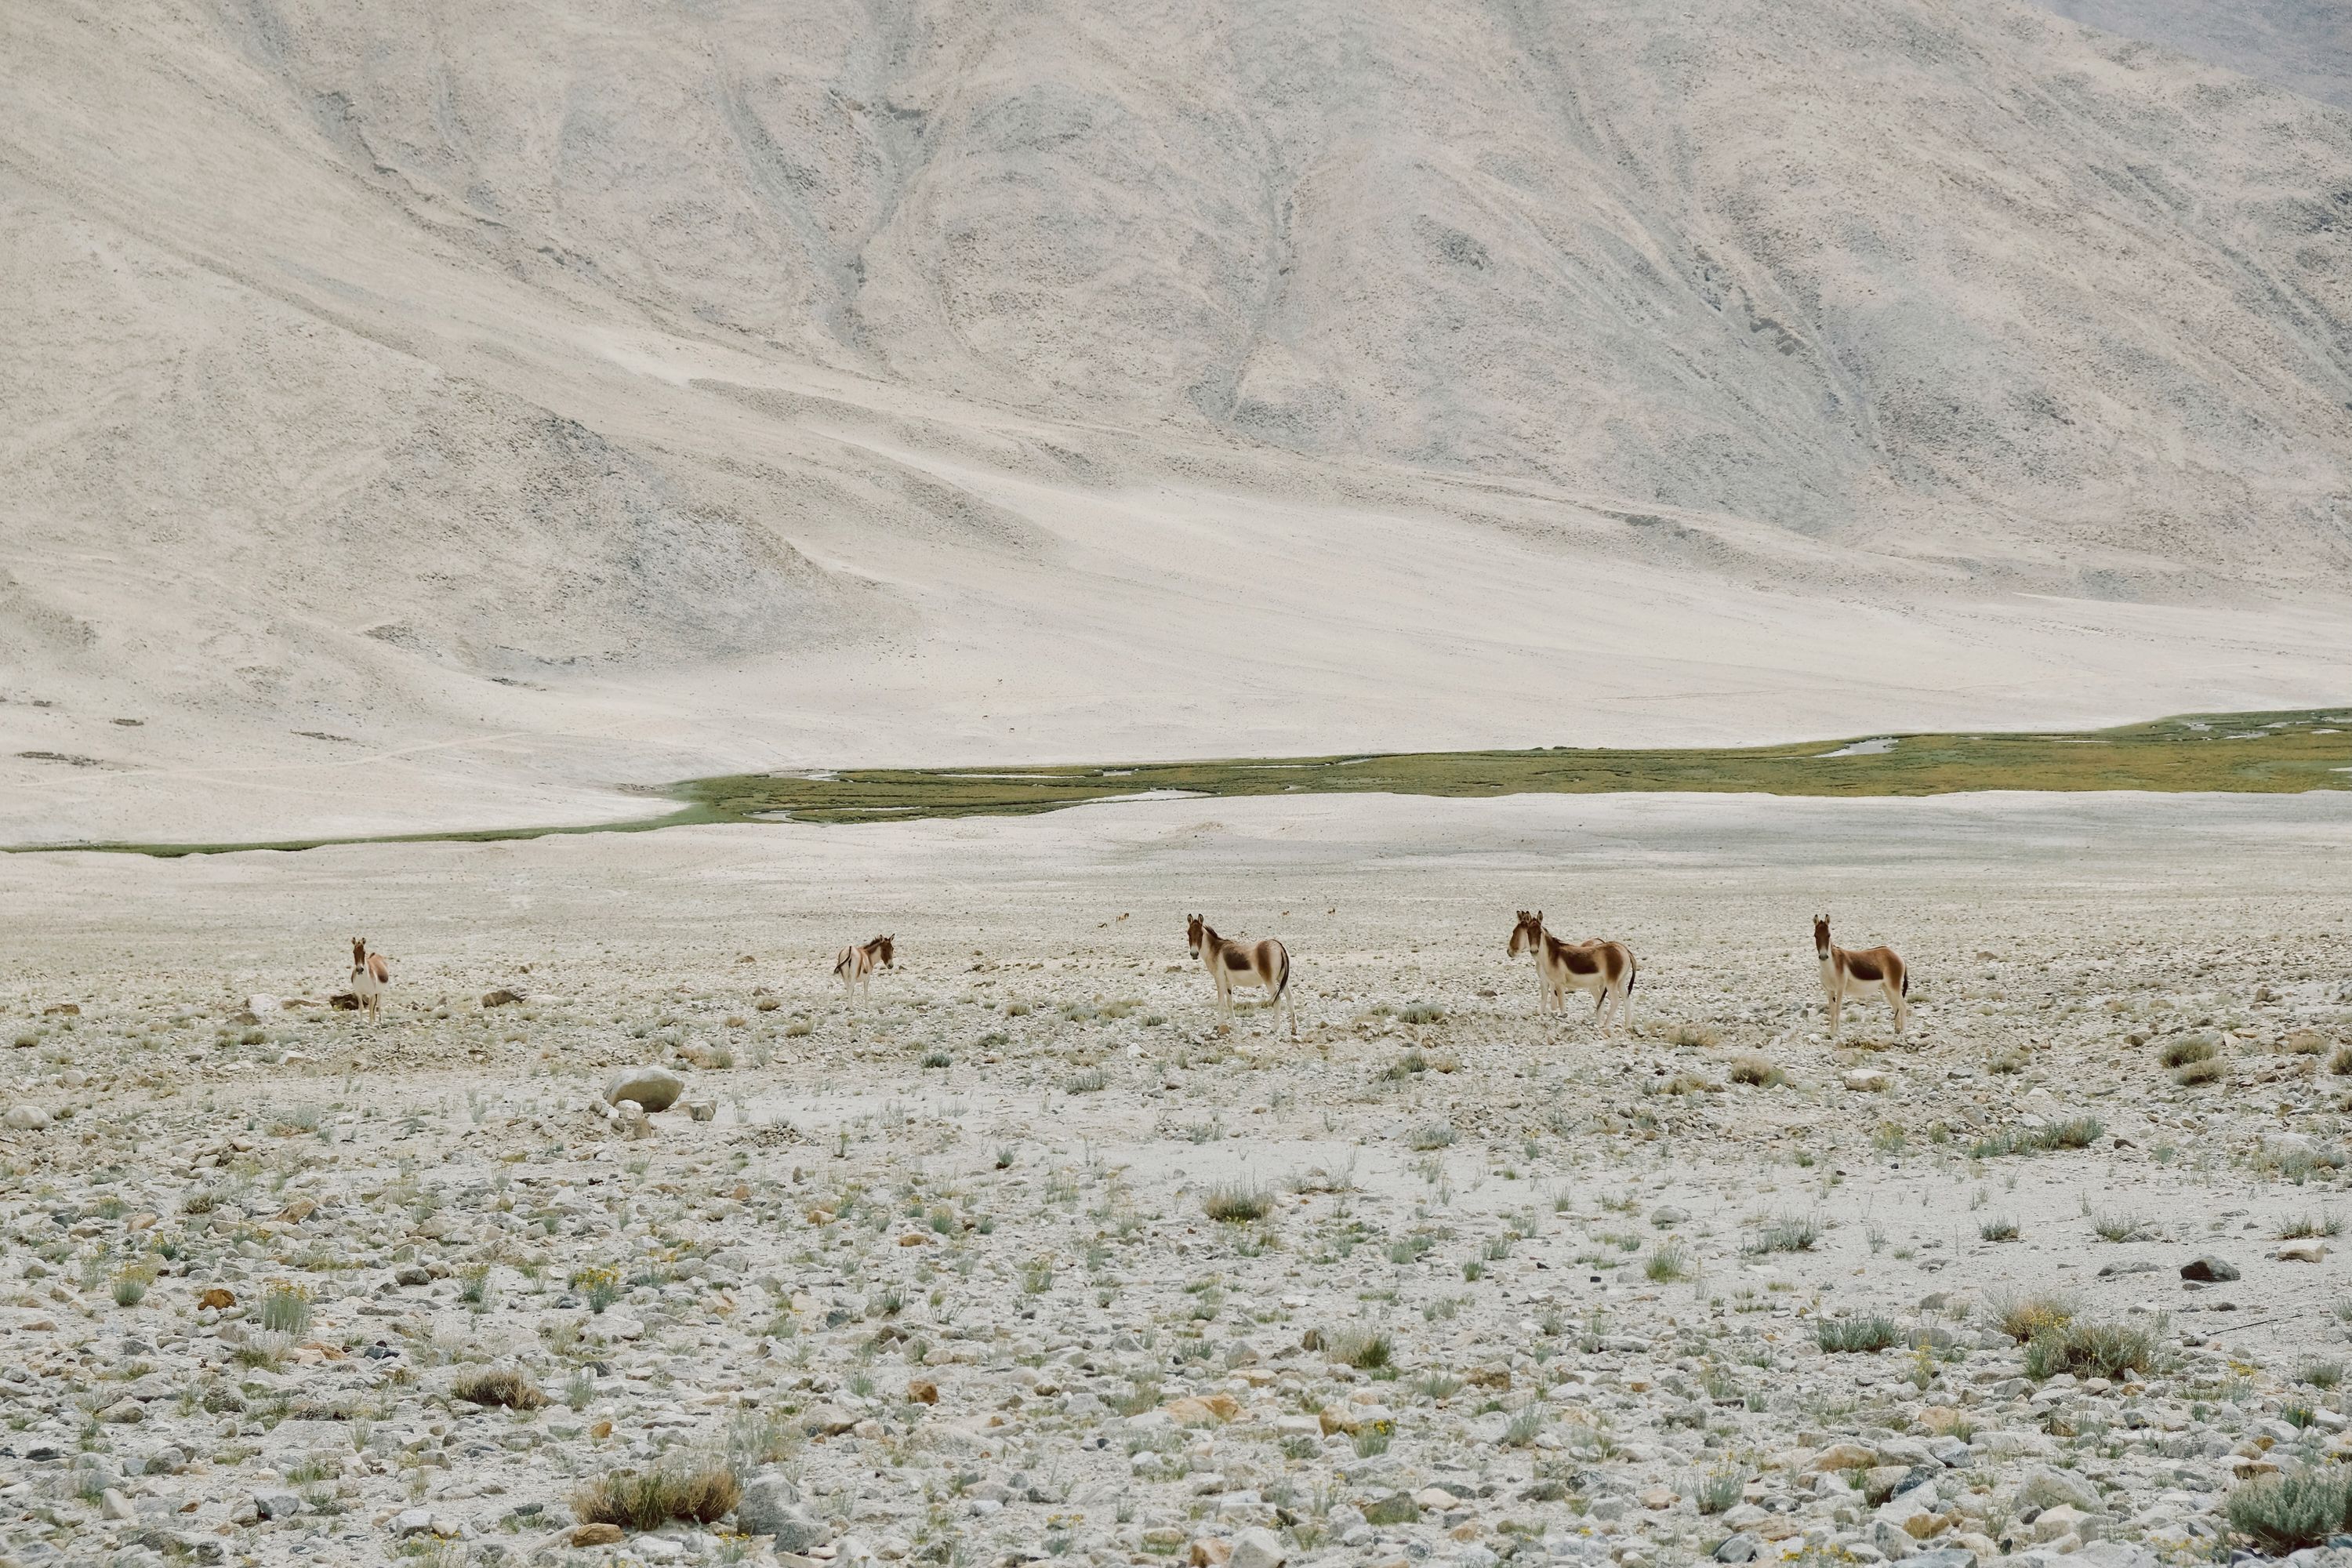 Kiangs somewhere in Ladakh, India. September 2021.